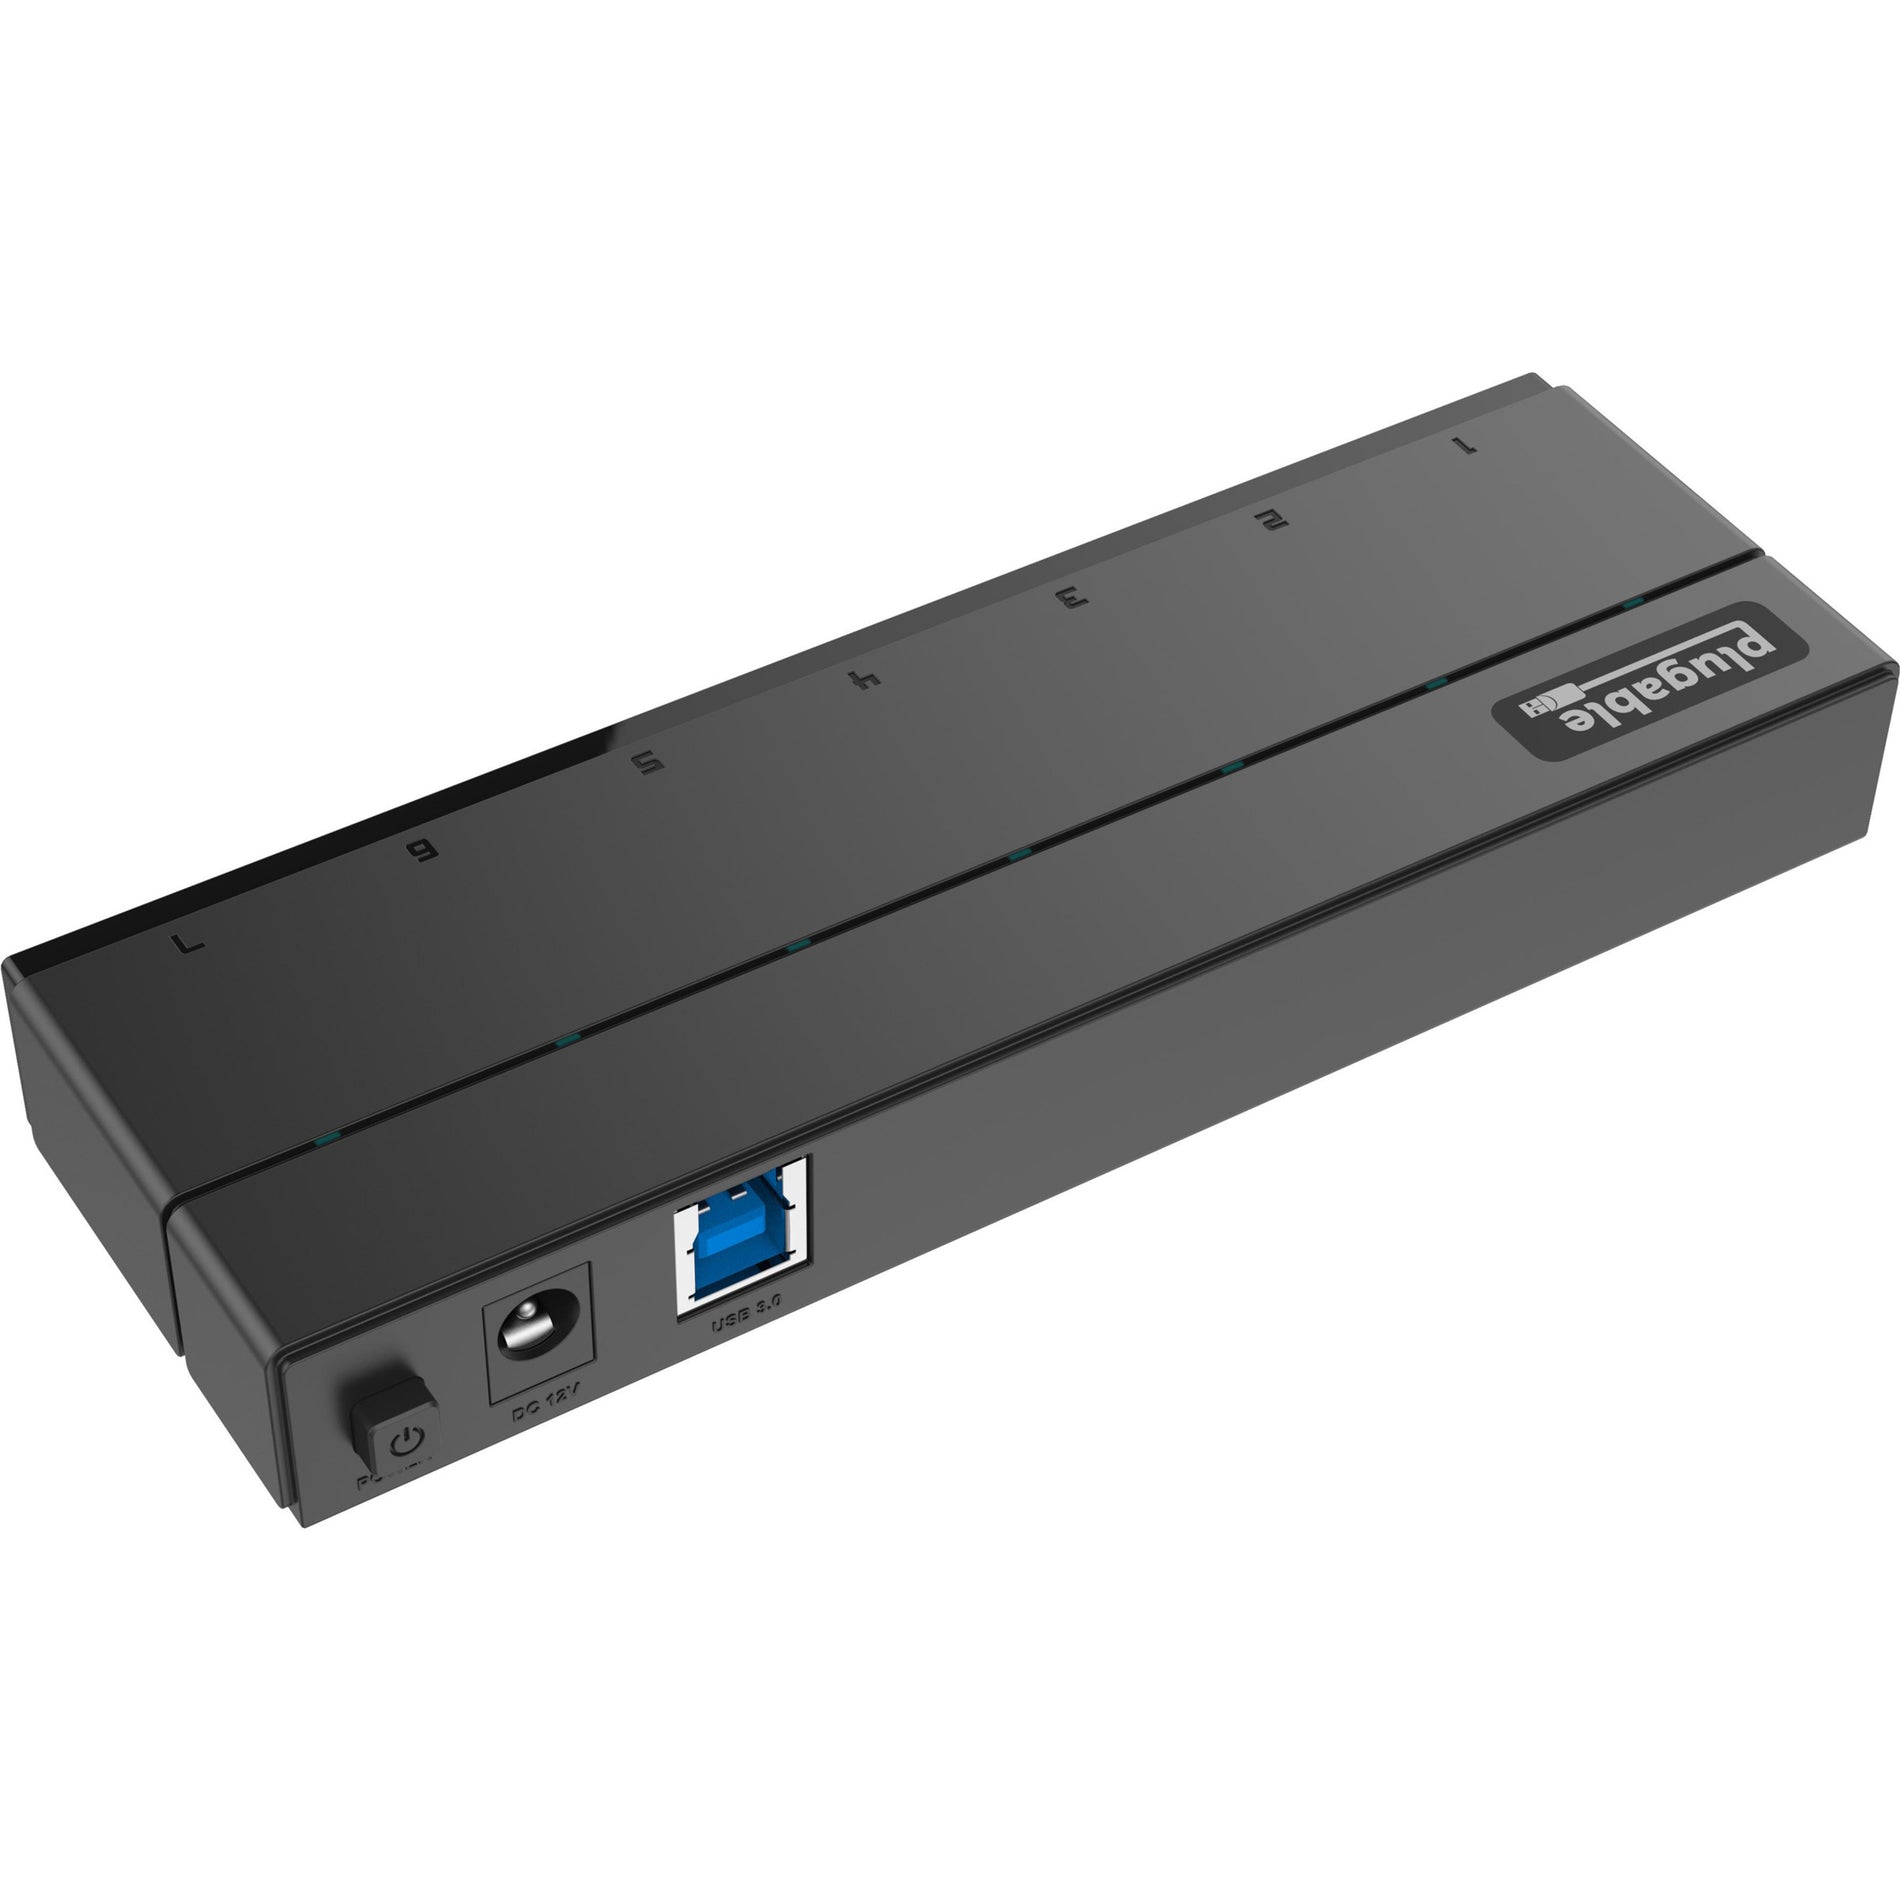 Plugable USB3-HUB7C USB 3.0 7-Port Hub with 36W Power Adapter Erweitern Sie Ihre USB-Konnektivität